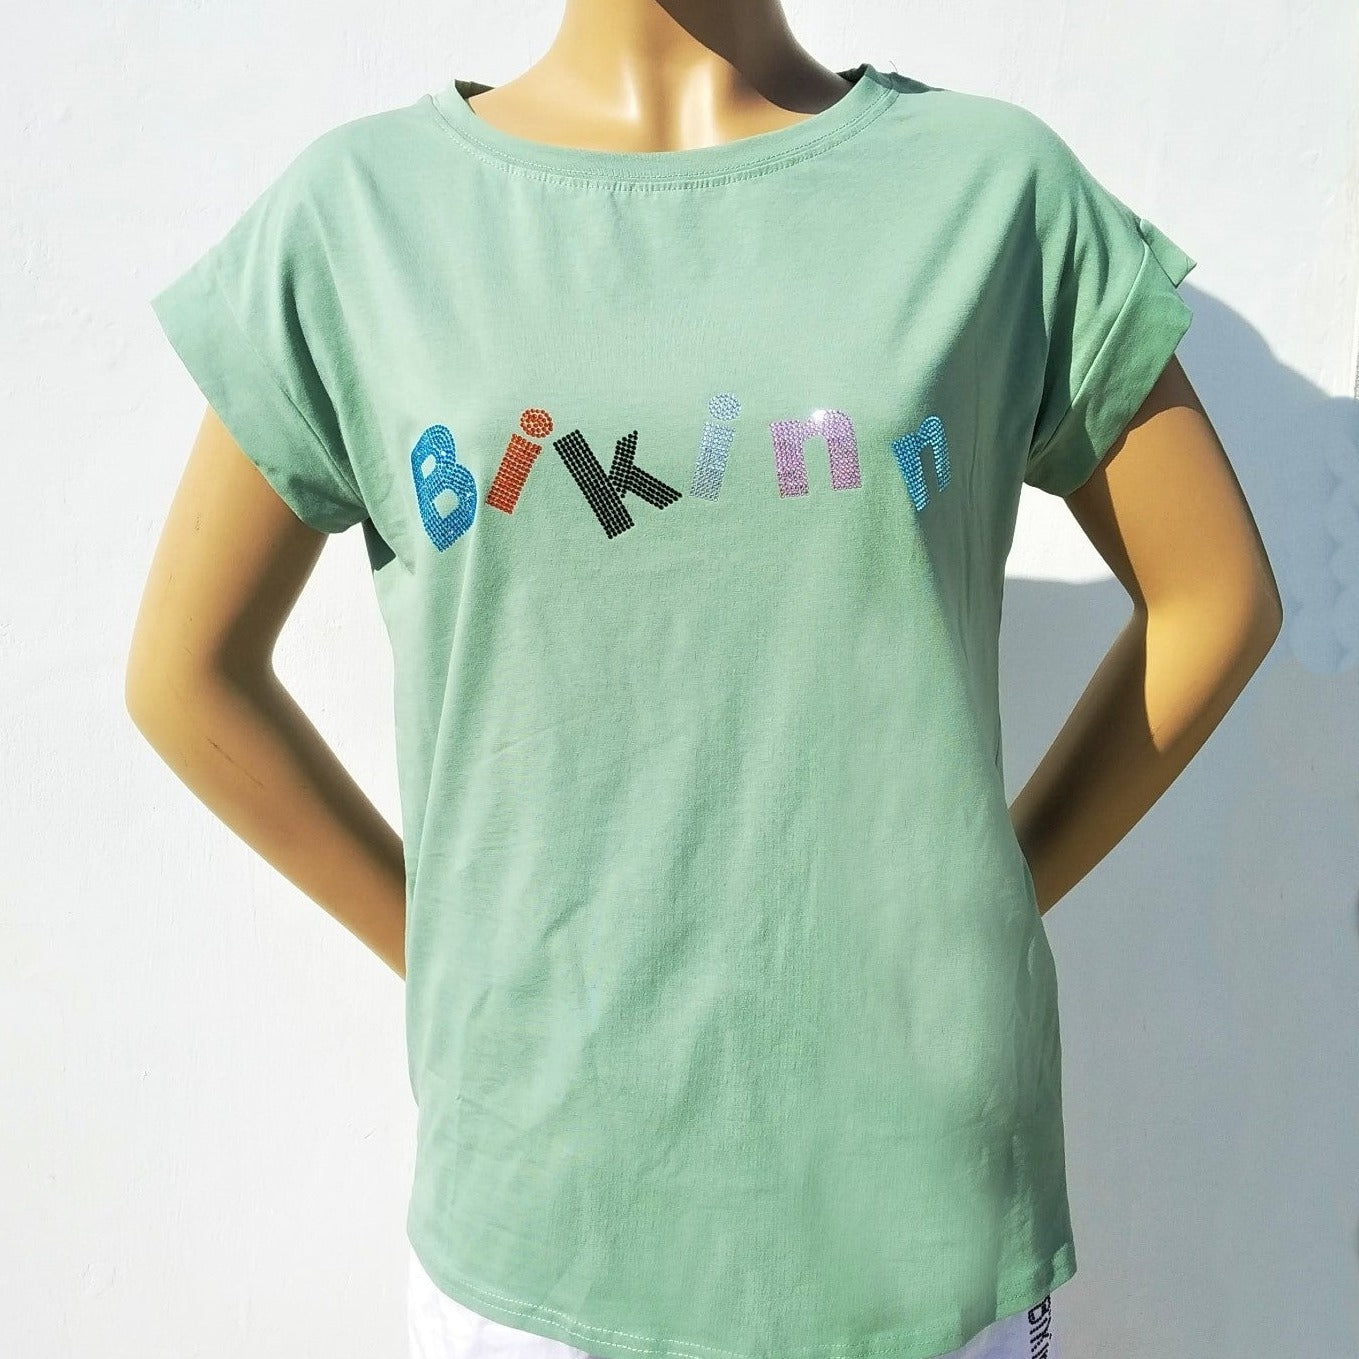 Green  short sleeves cotton-lycra T-shirt, multicolor rhinestones crystals printed logo. Bling-bling fashion. bikinn.com